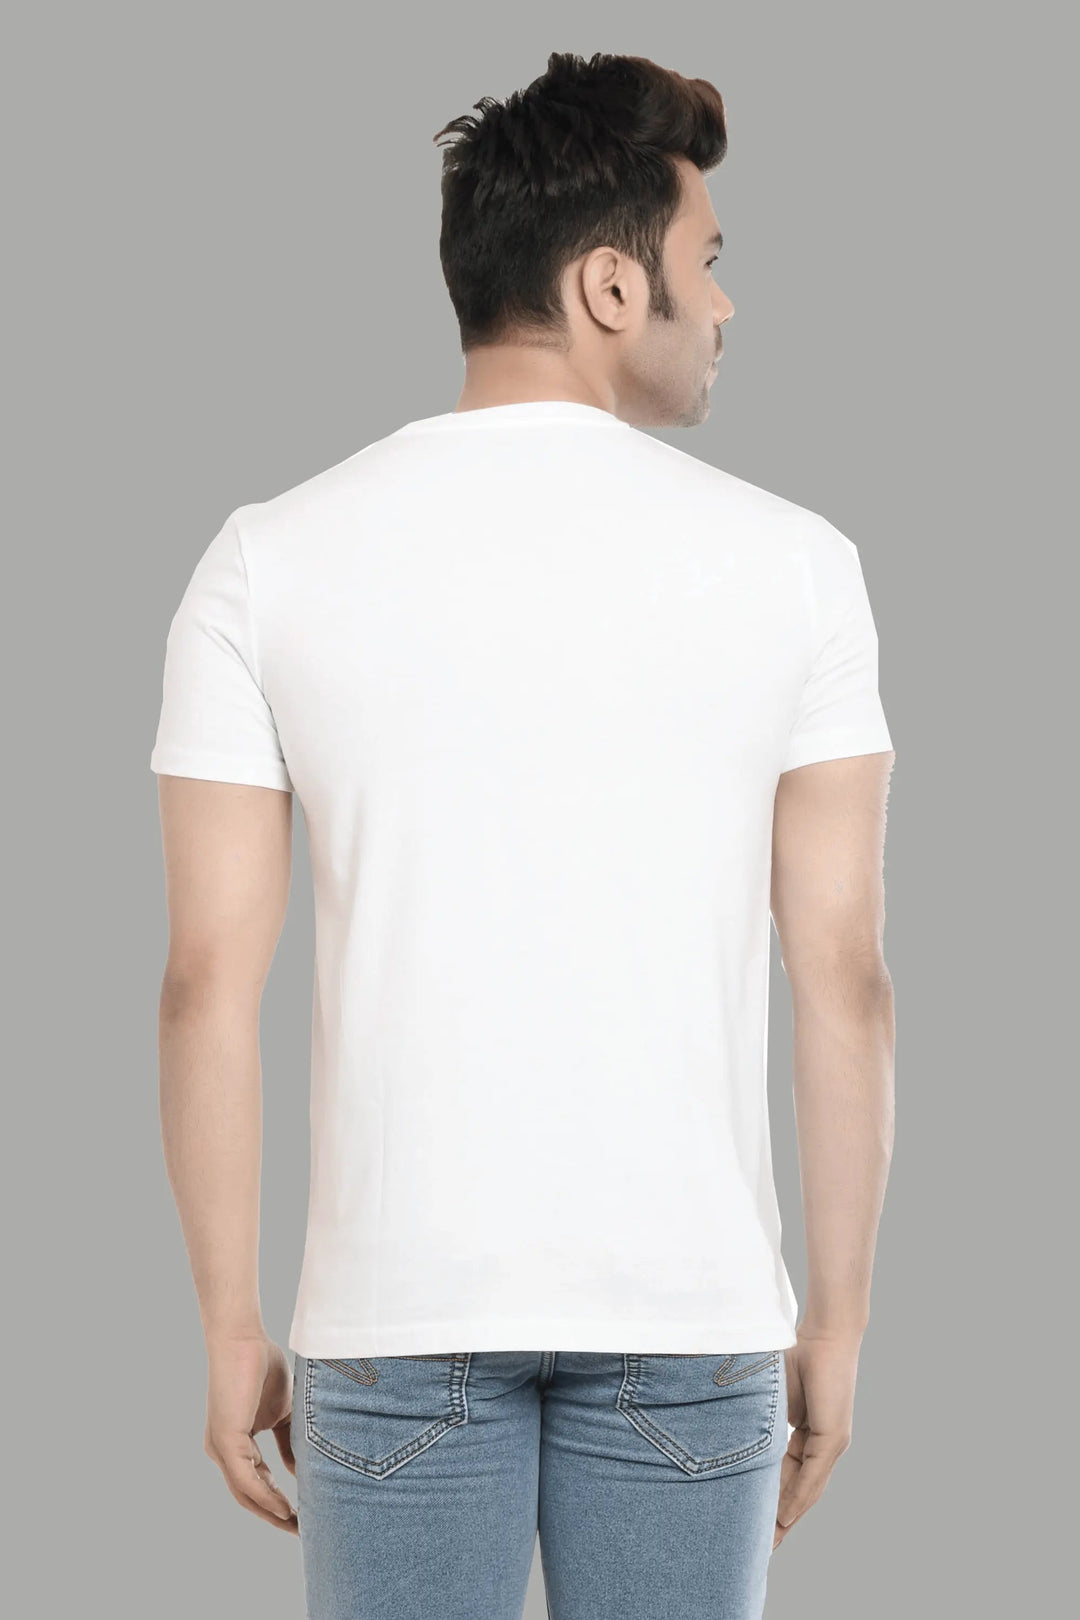 Regular Fit White Brand Printed Cotton T-Shirt For Men - Peplos Jeans 